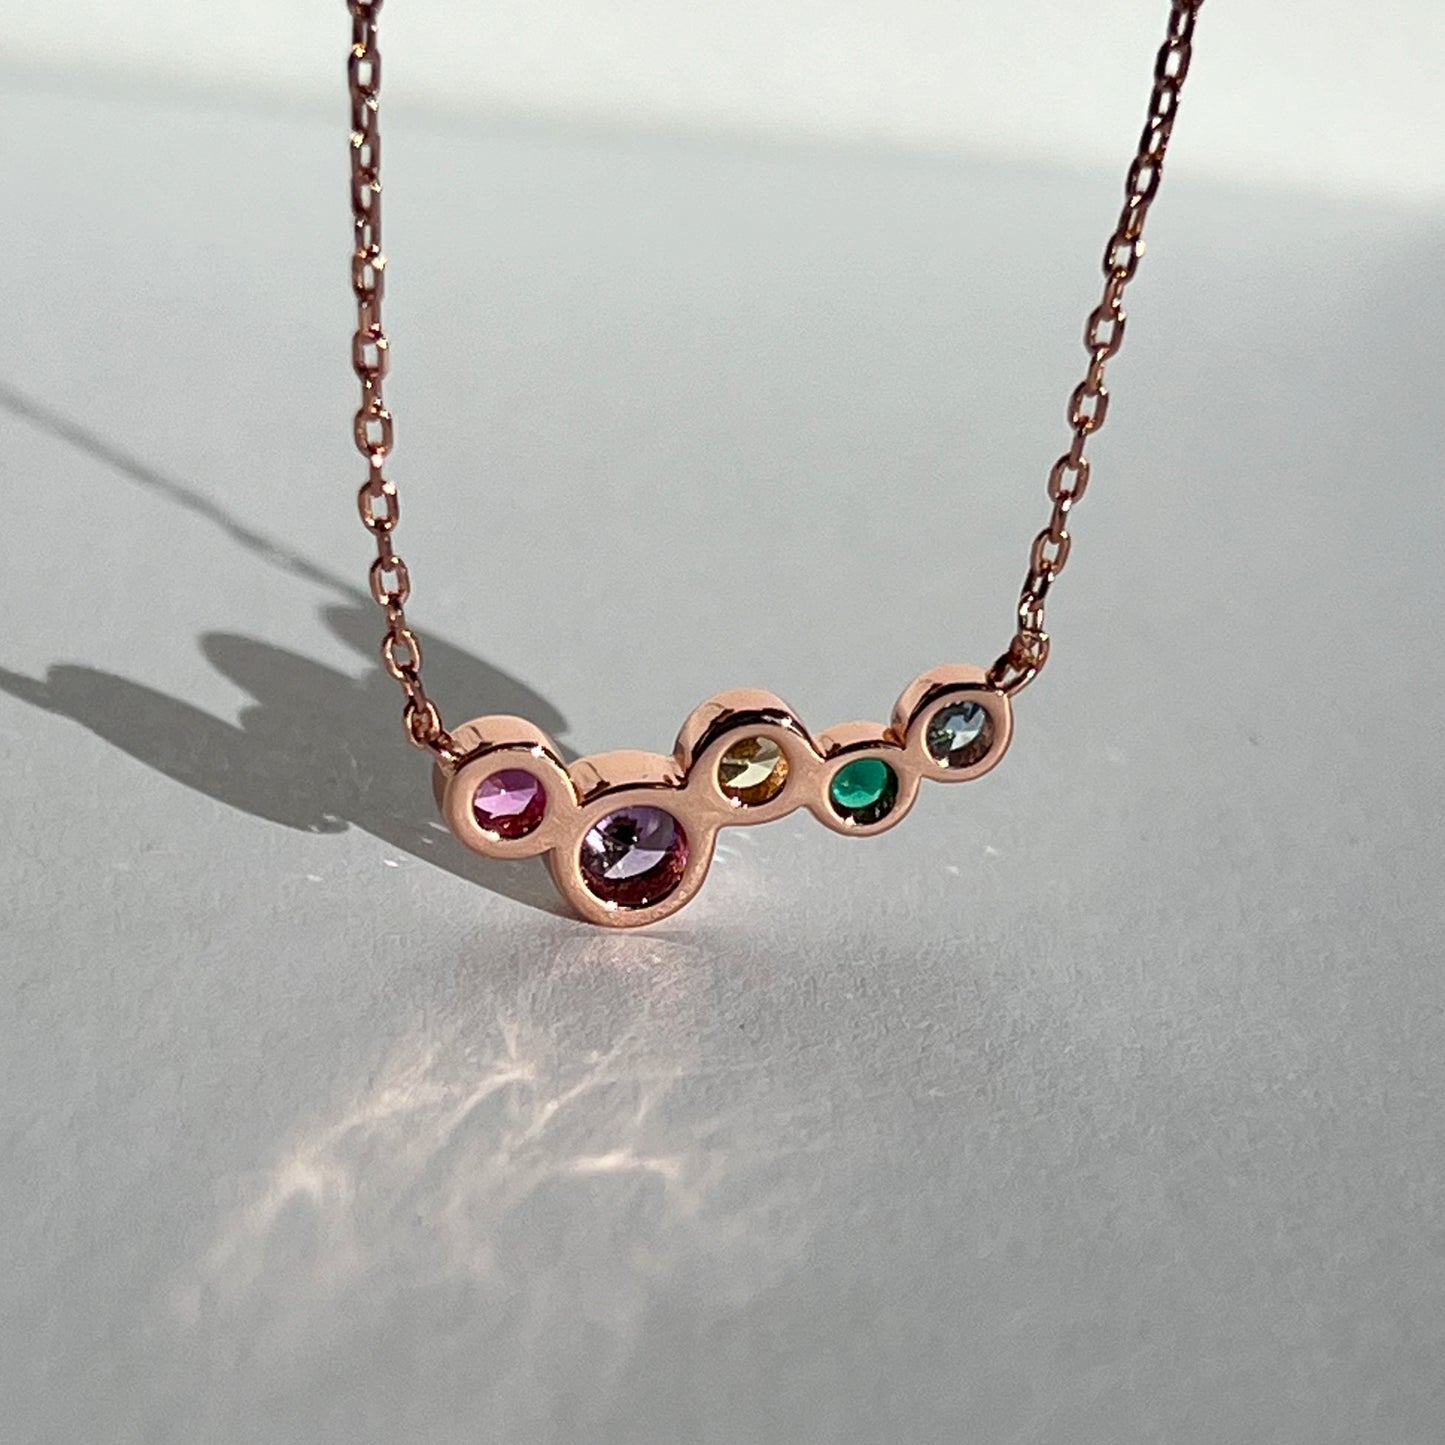 Arissa Rainbow Necklace in Rose Gold